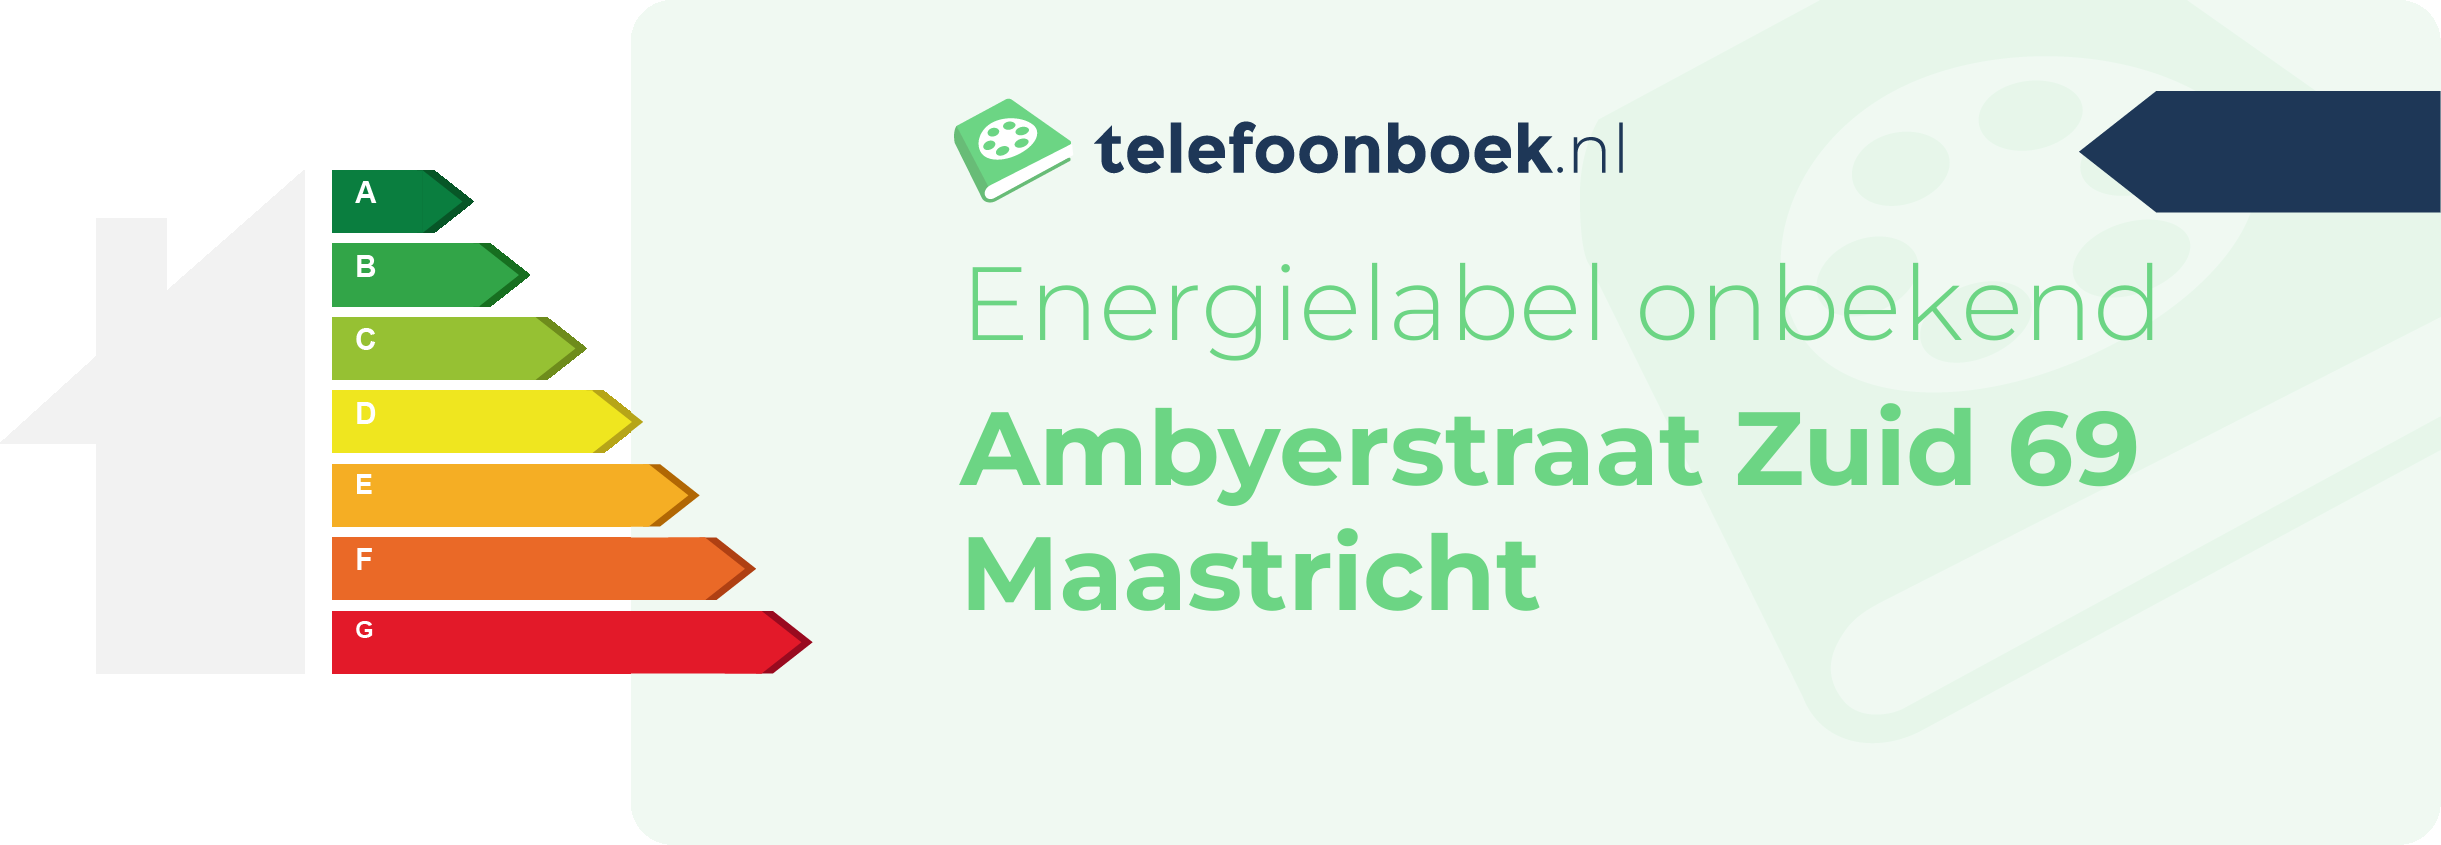 Energielabel Ambyerstraat Zuid 69 Maastricht